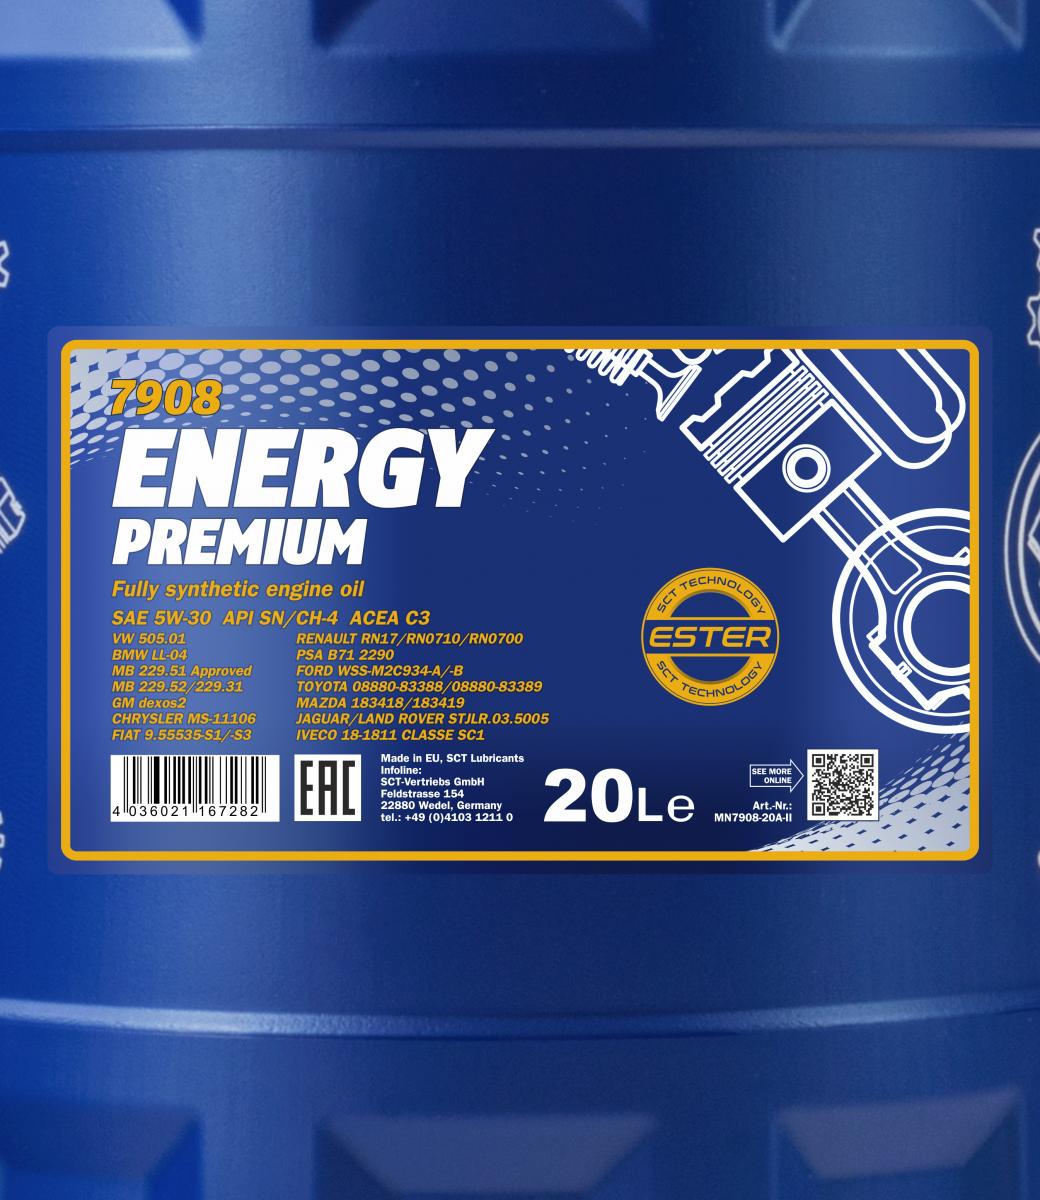 Energy Premium